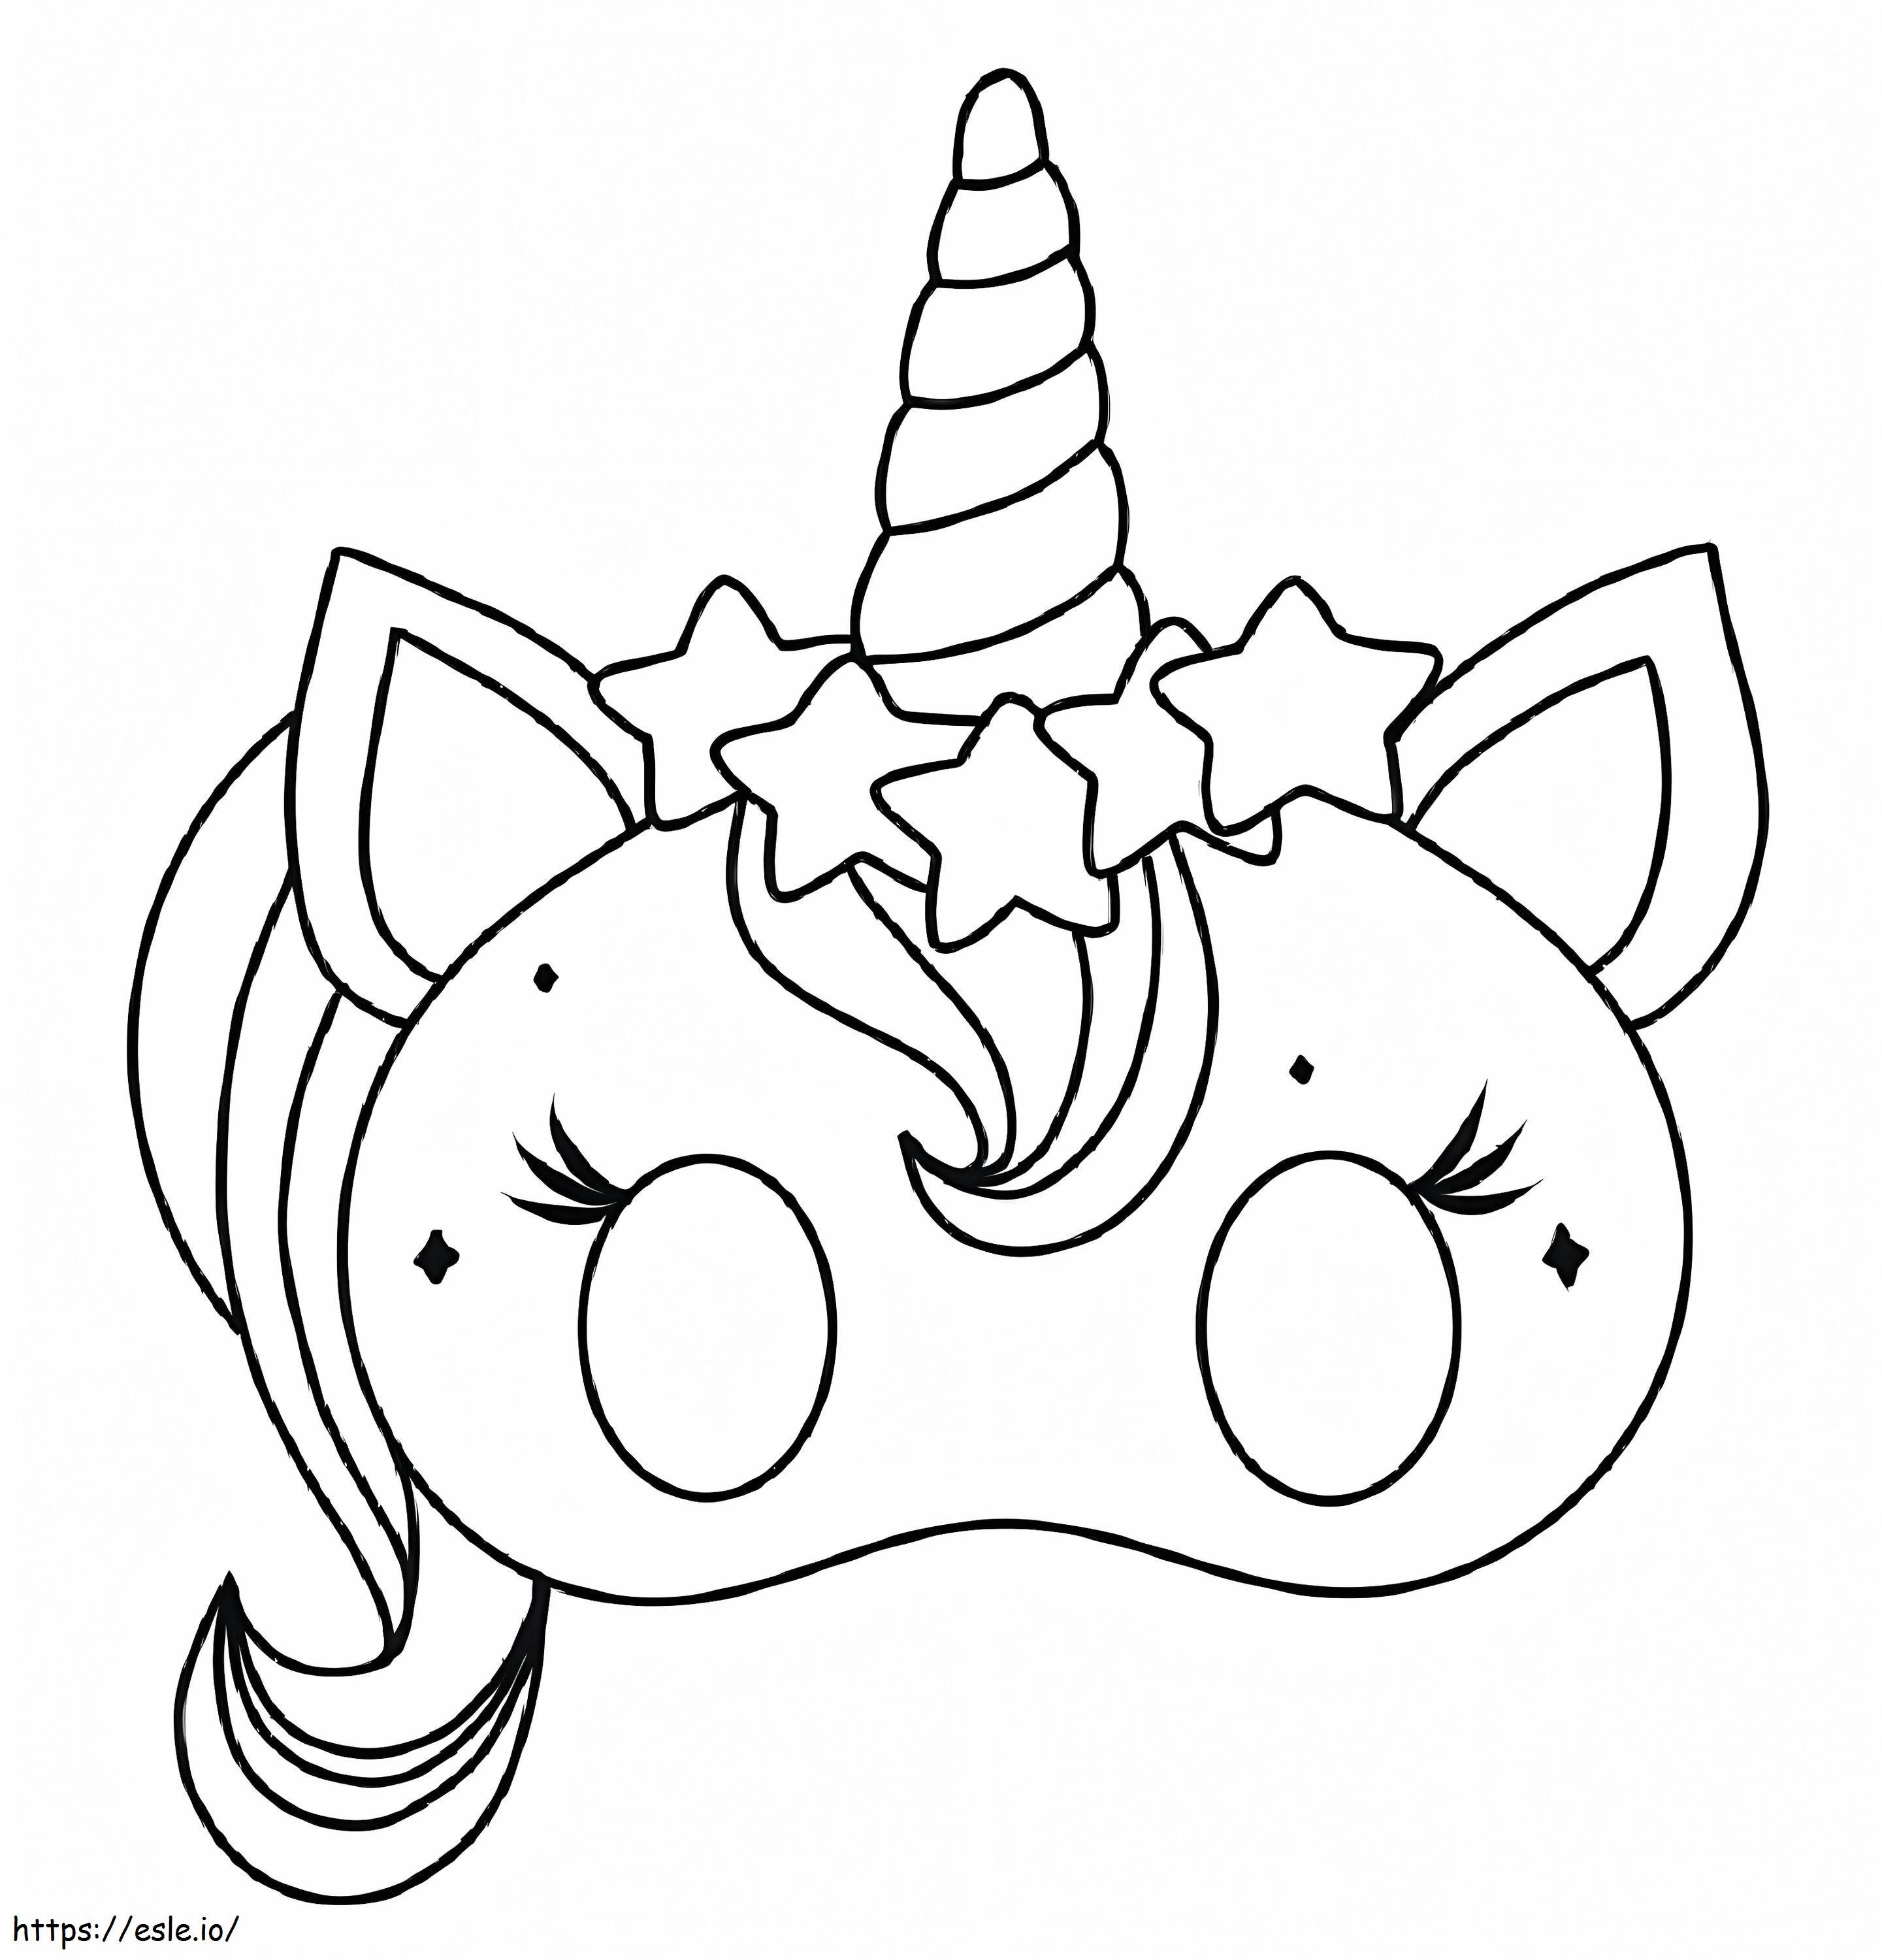 Unikornis macska maszk kifestő